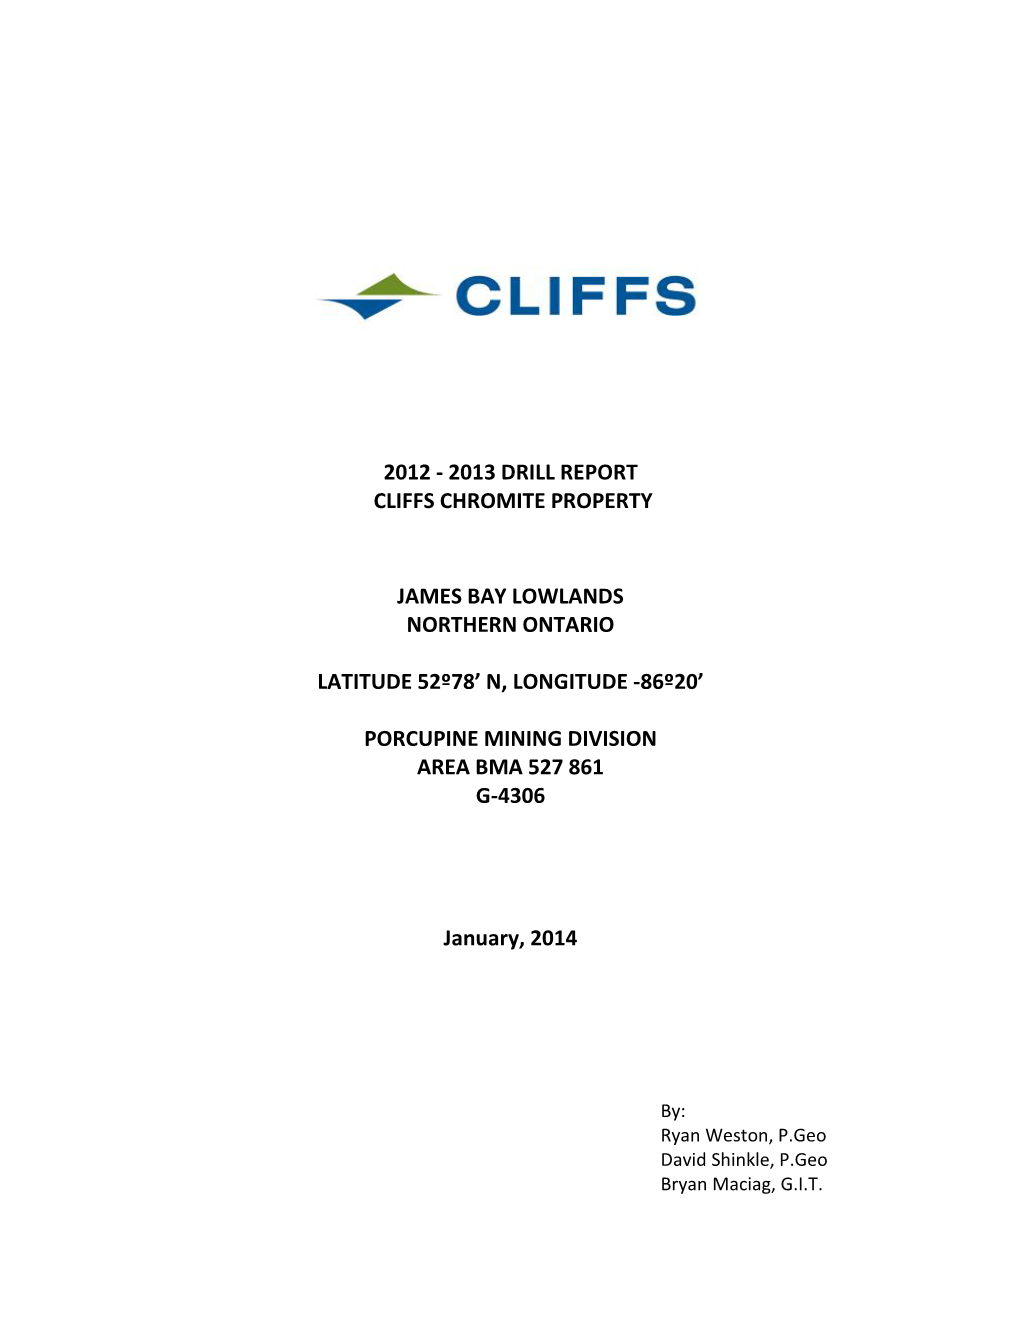 2012 - 2013 Drill Report Cliffs Chromite Property